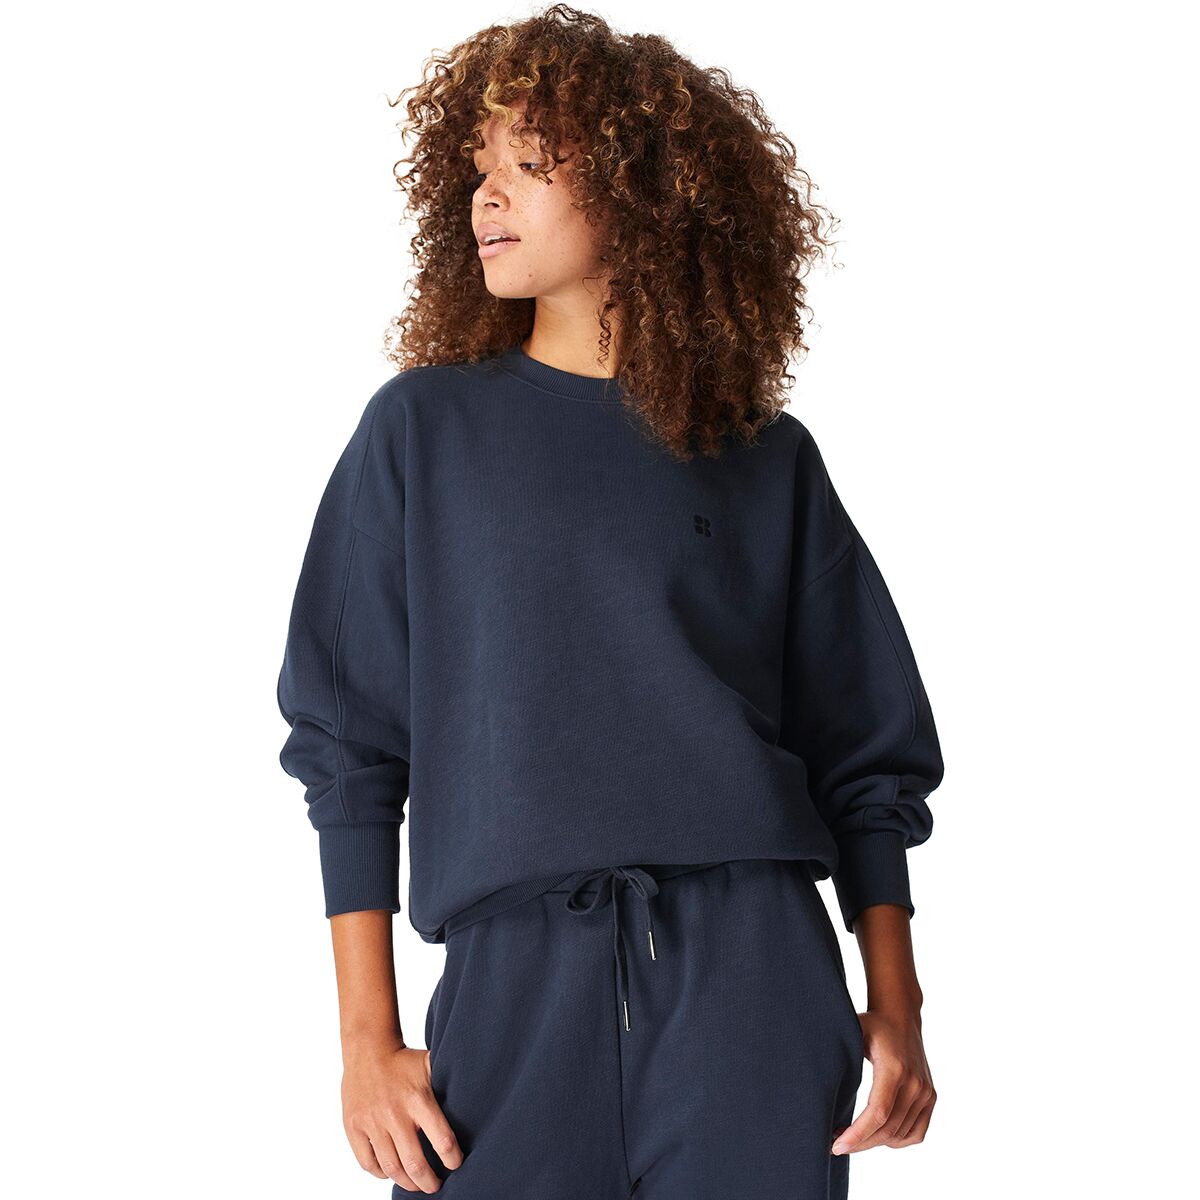 Toggi Ovington Ladies Sweatshirt Top sizes 8 or 10 Slate or Russet Colours 